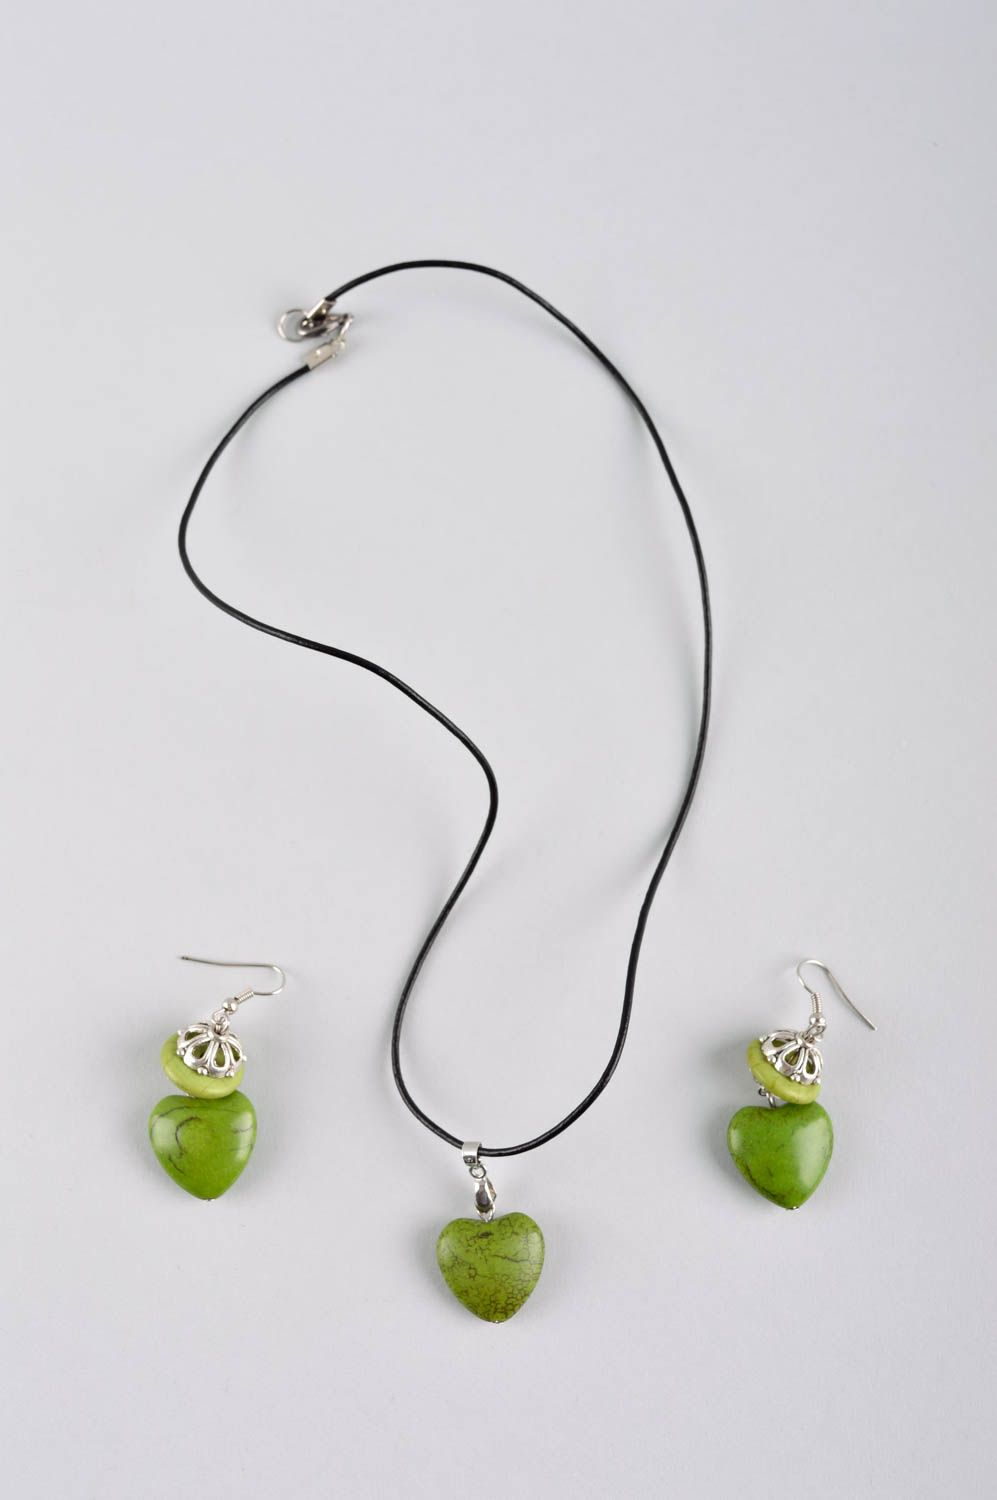 Handmade necklace designer earrings unusual jewelry gift ideas jewelry set photo 2